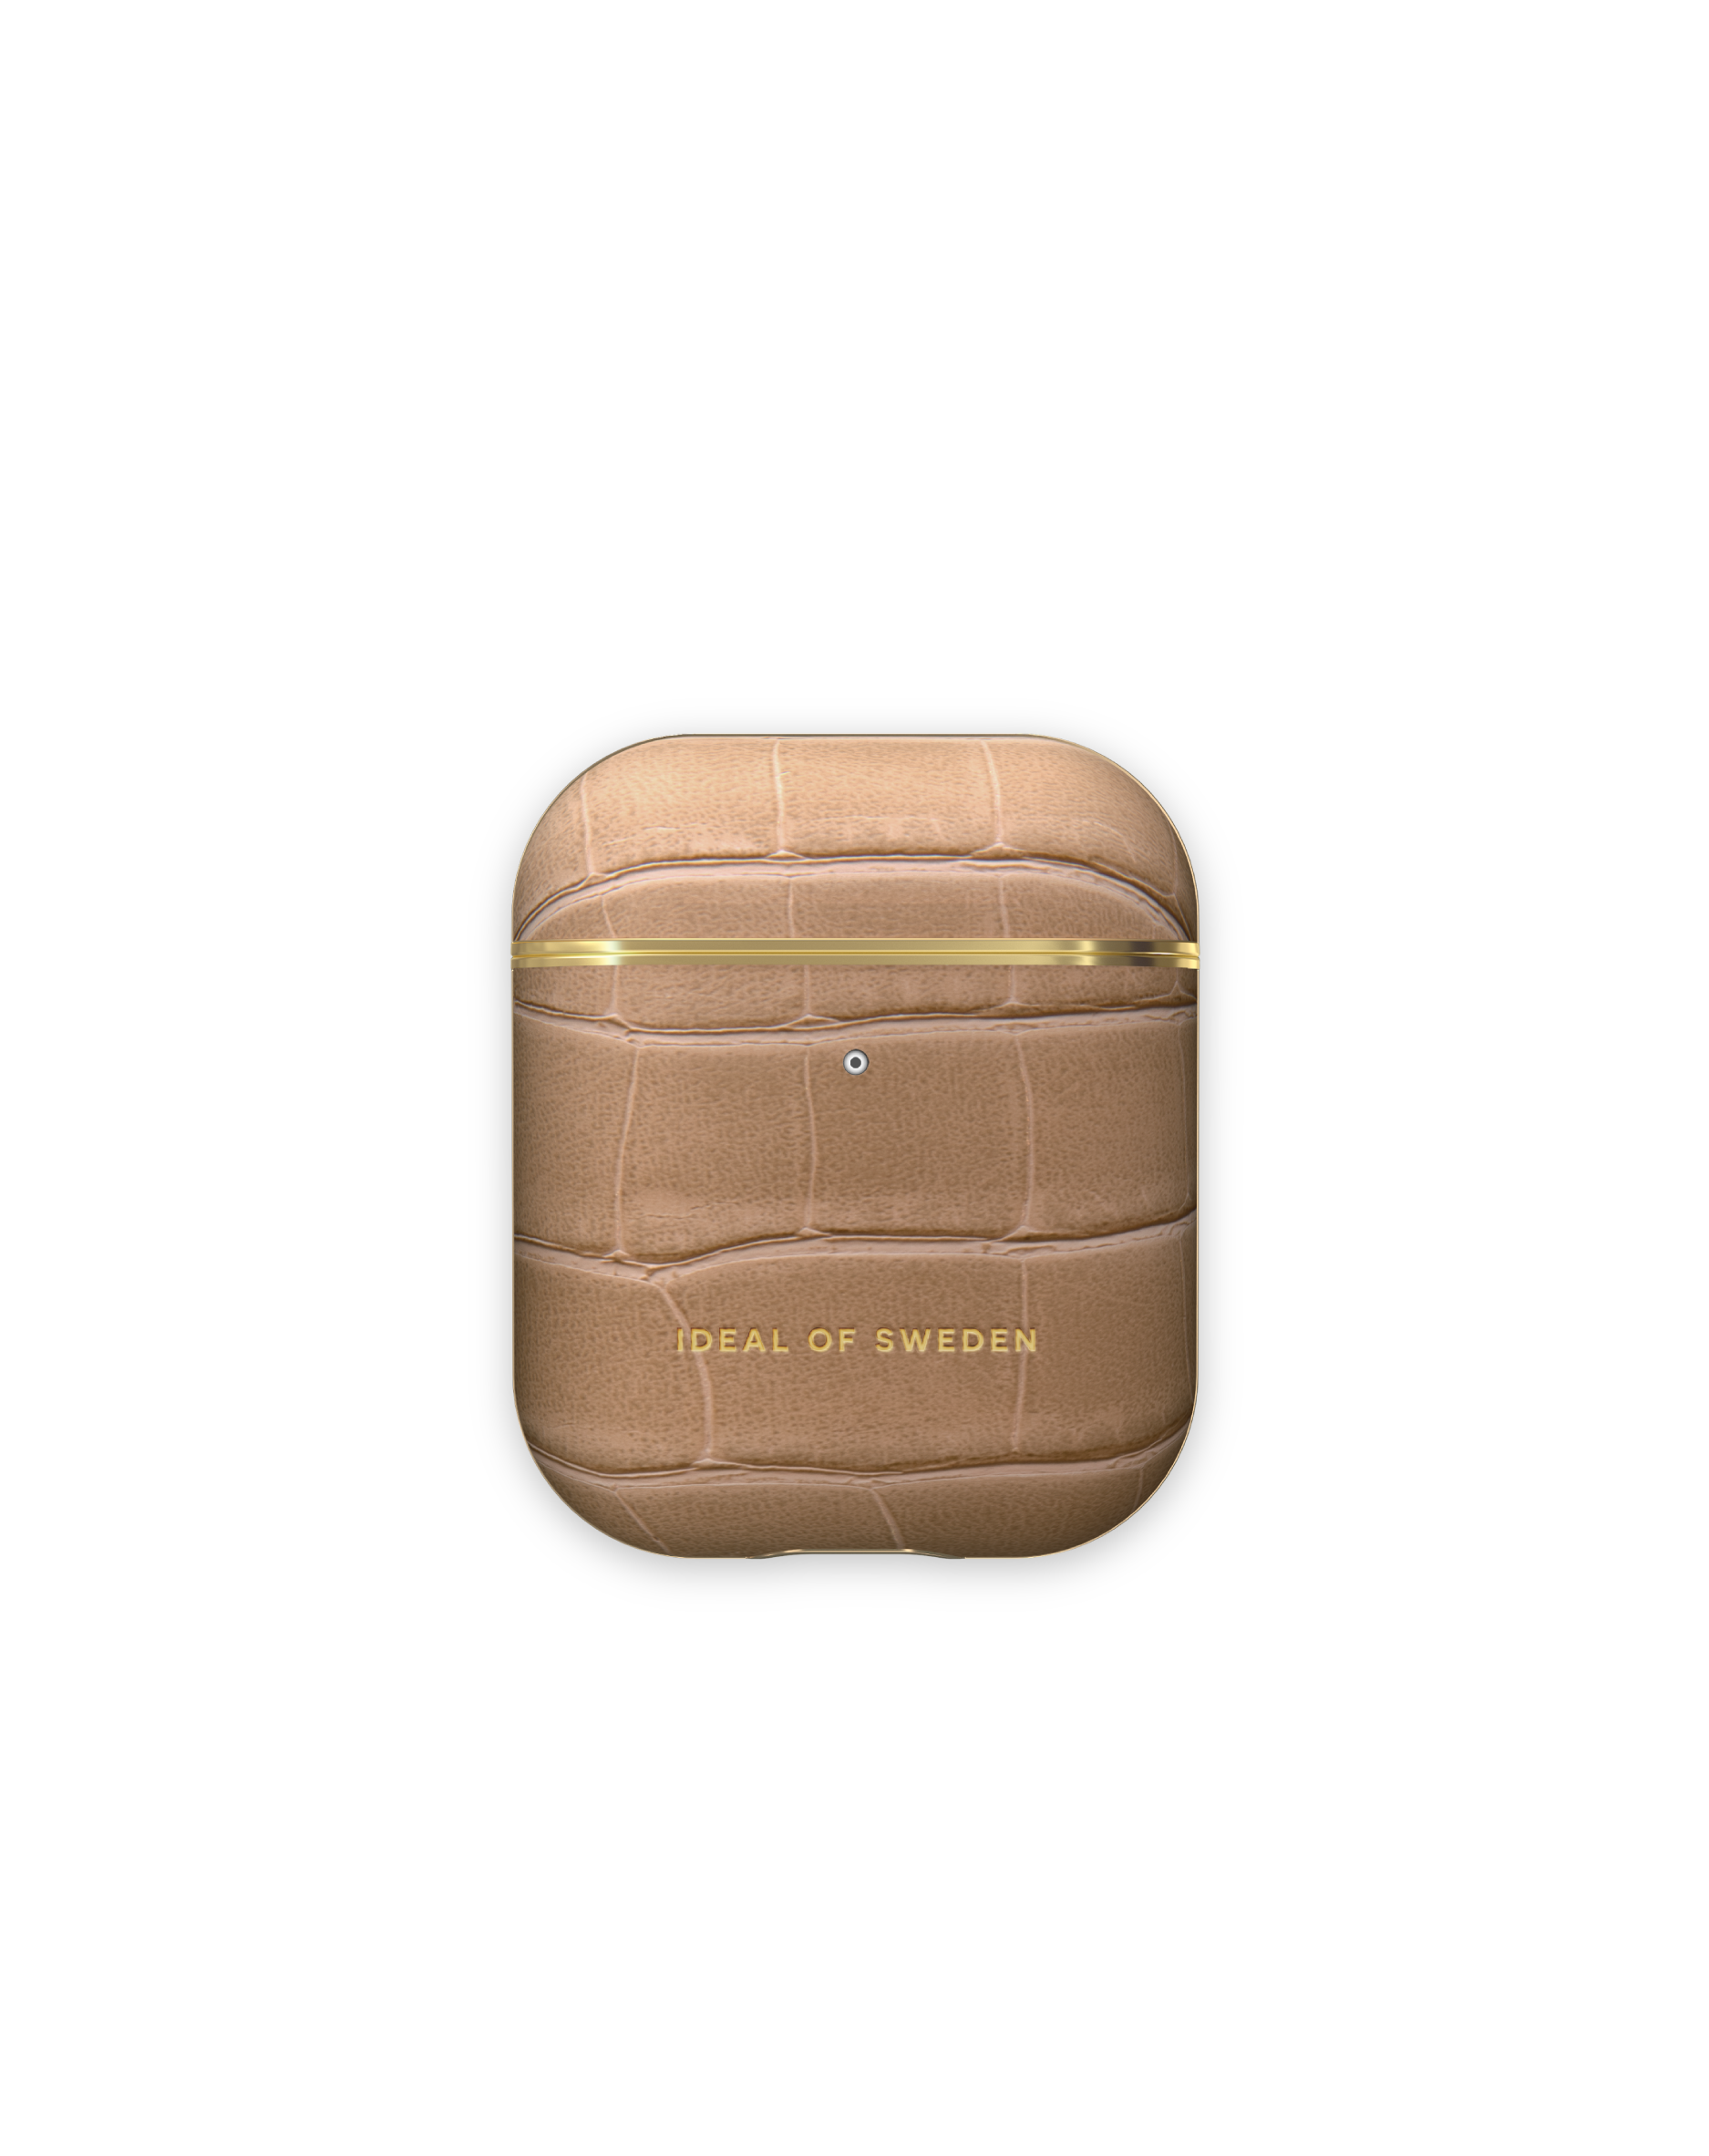 OF Apple Croco Full IDEAL Case Cover AirPod passend Camel SWEDEN IDAPCAW21-325 für: